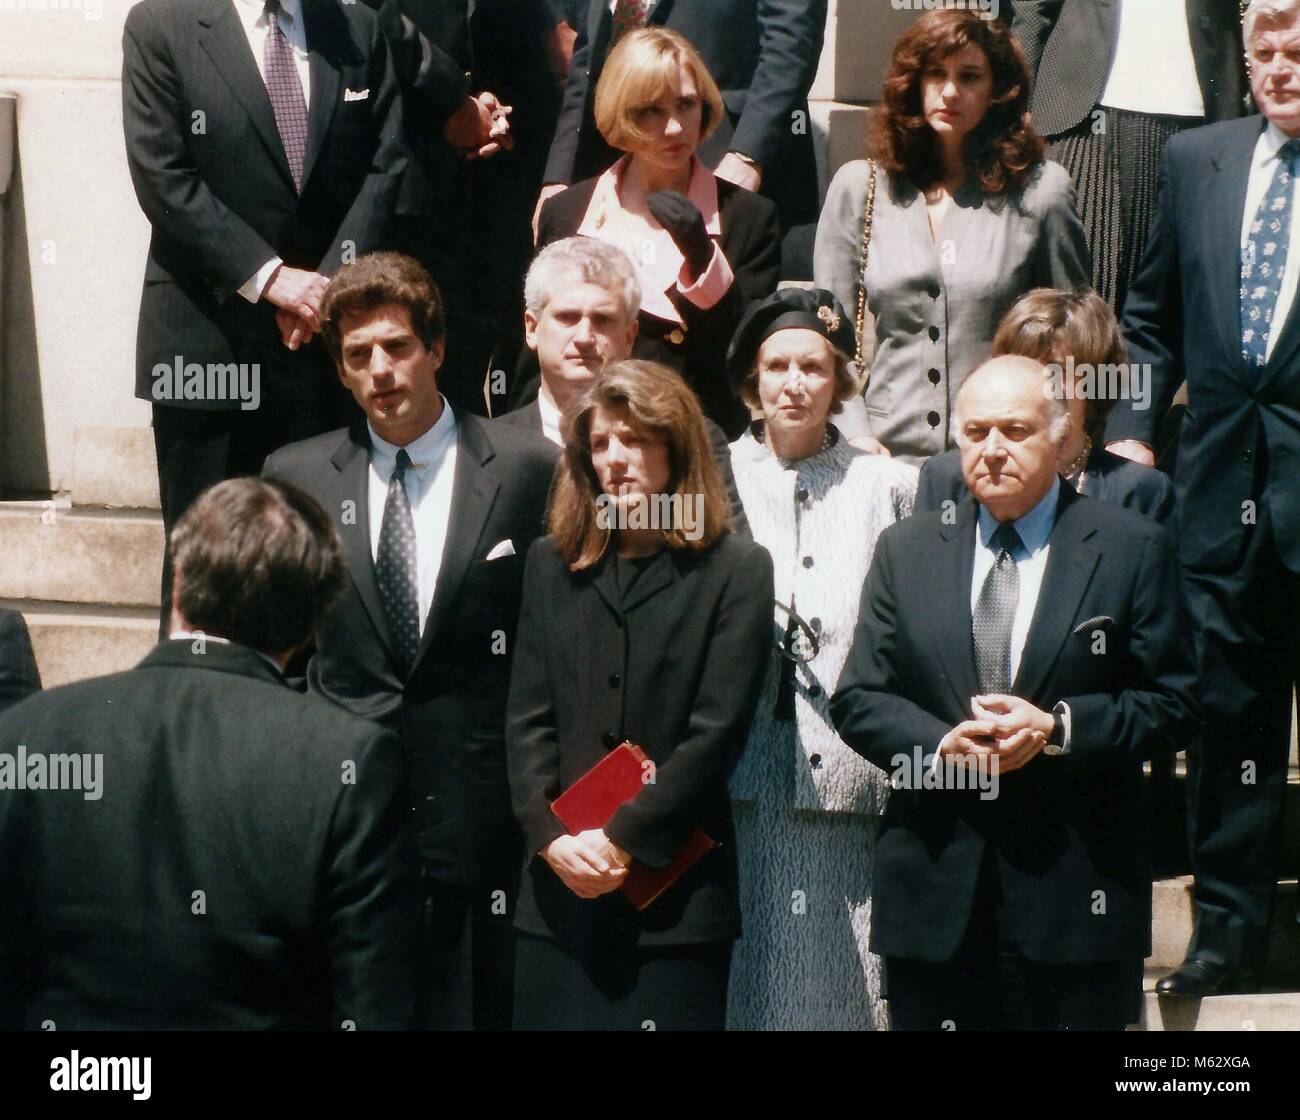 1994 FILE PHOTO Jackie O Funeral, JFK Jr. Caroline Kennedy Hillary Clinton behind Family Photo By John Barrett-PHOTOlink Stock Photo